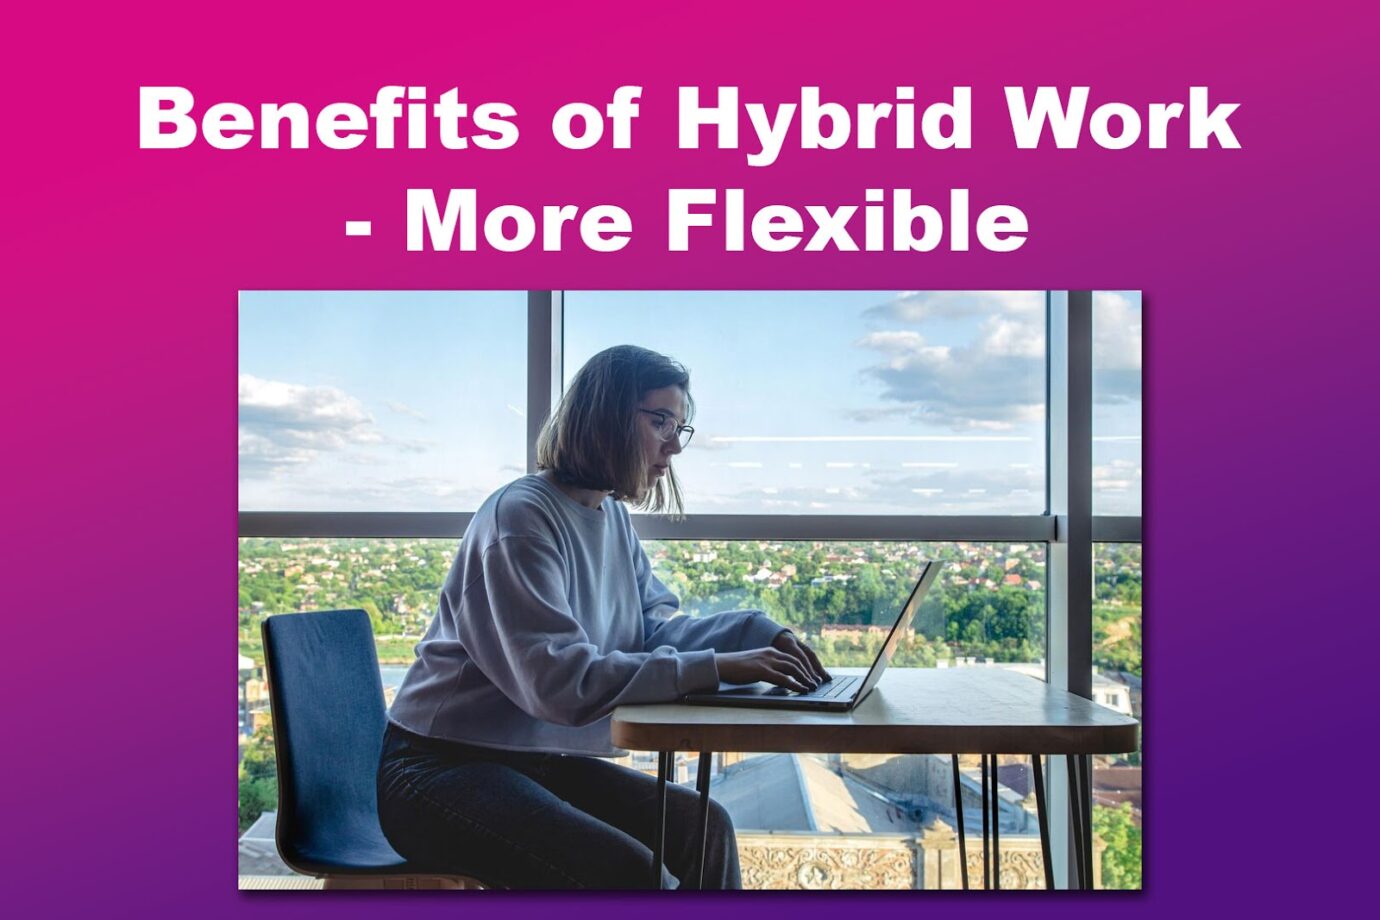 Benefits of Hybrid Work - More Flexible